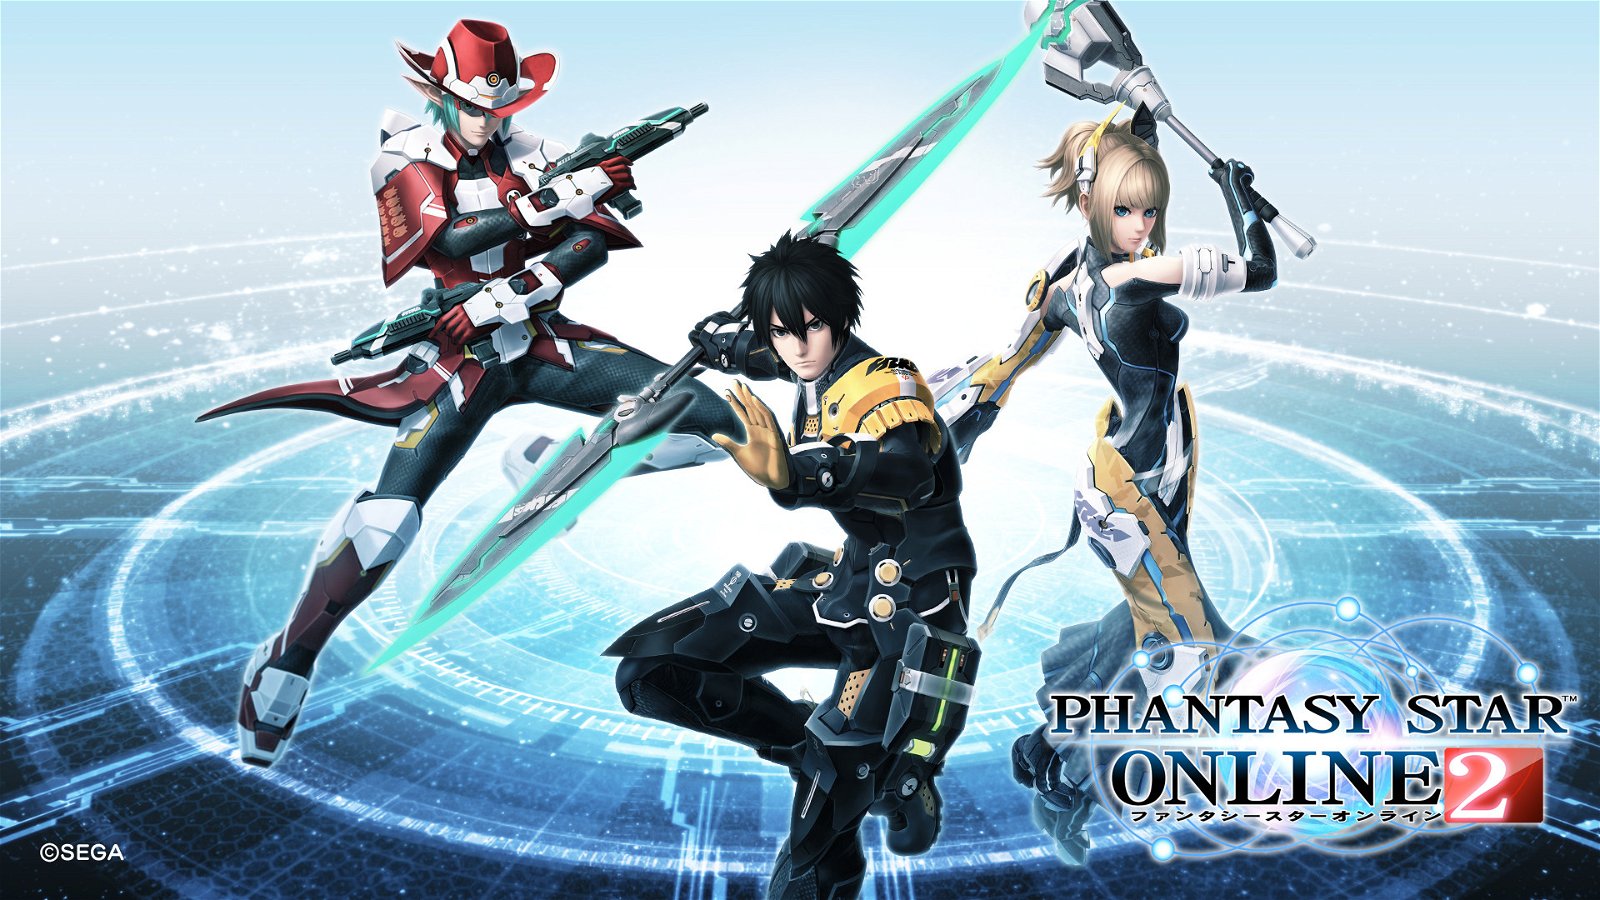 Phantasy Star Online 2 avrà miglioramenti per Xbox One X